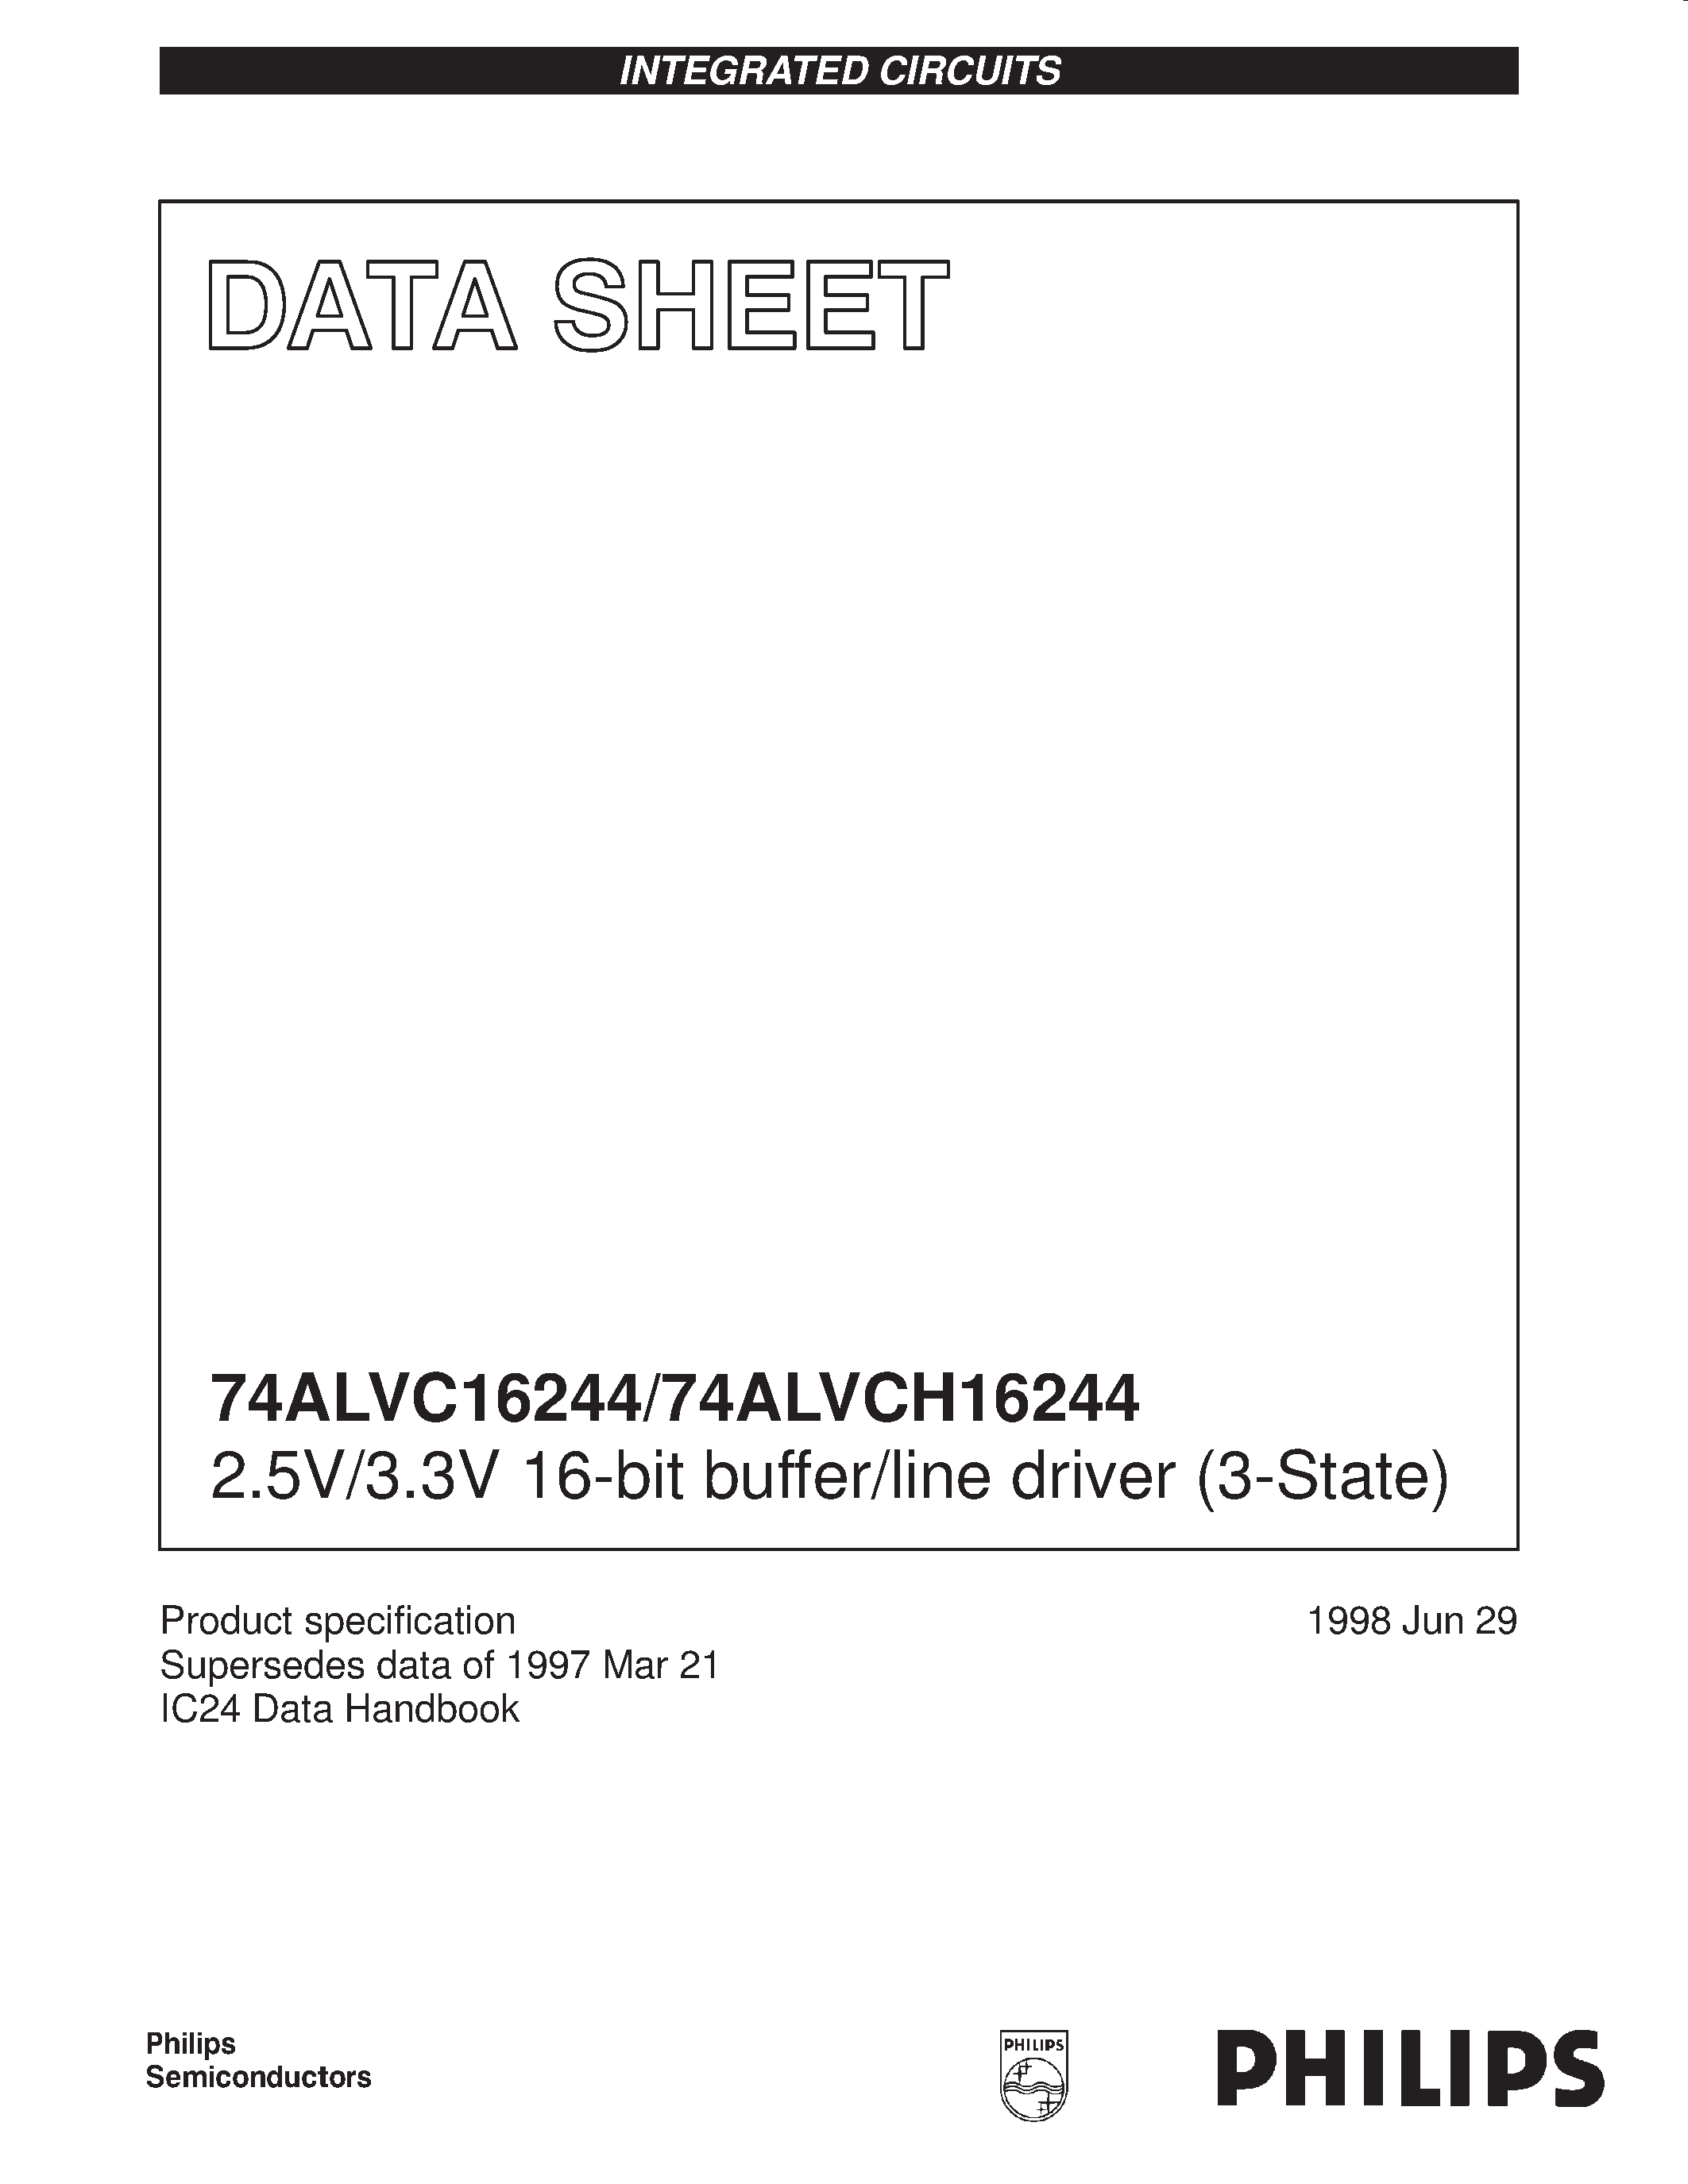 Datasheet 74ALVC16244DGG - 2.5V/3.3V 16-bit buffer/line driver 3-State page 1